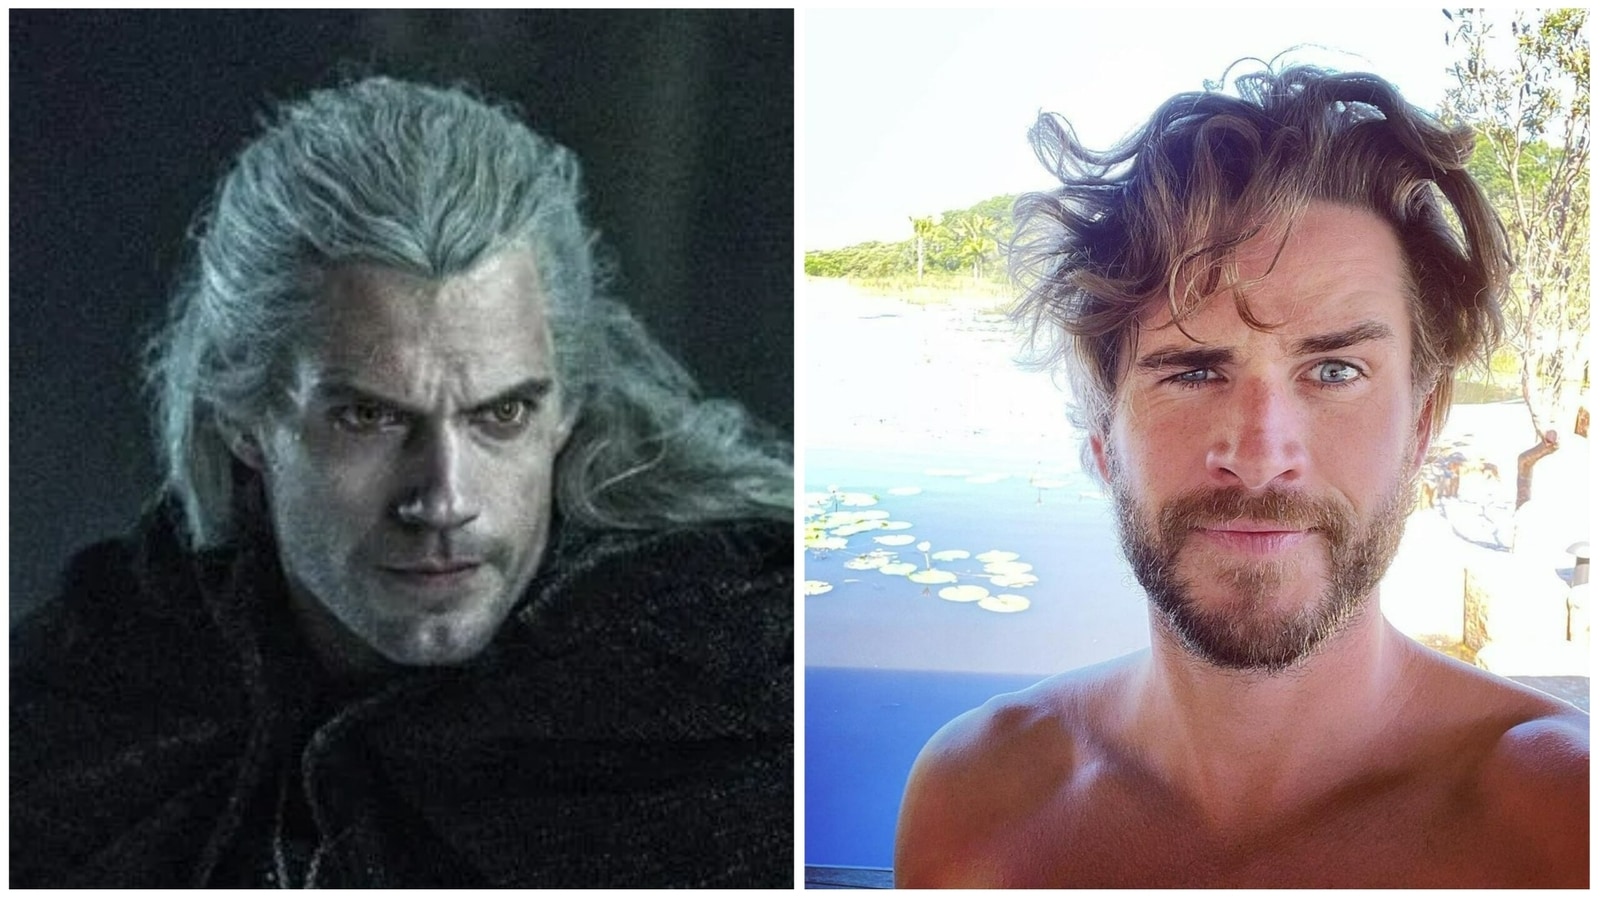 Henry Cavill Leaving THE WITCHER, Liam Hemsworth Joining as Geralt - Nerdist